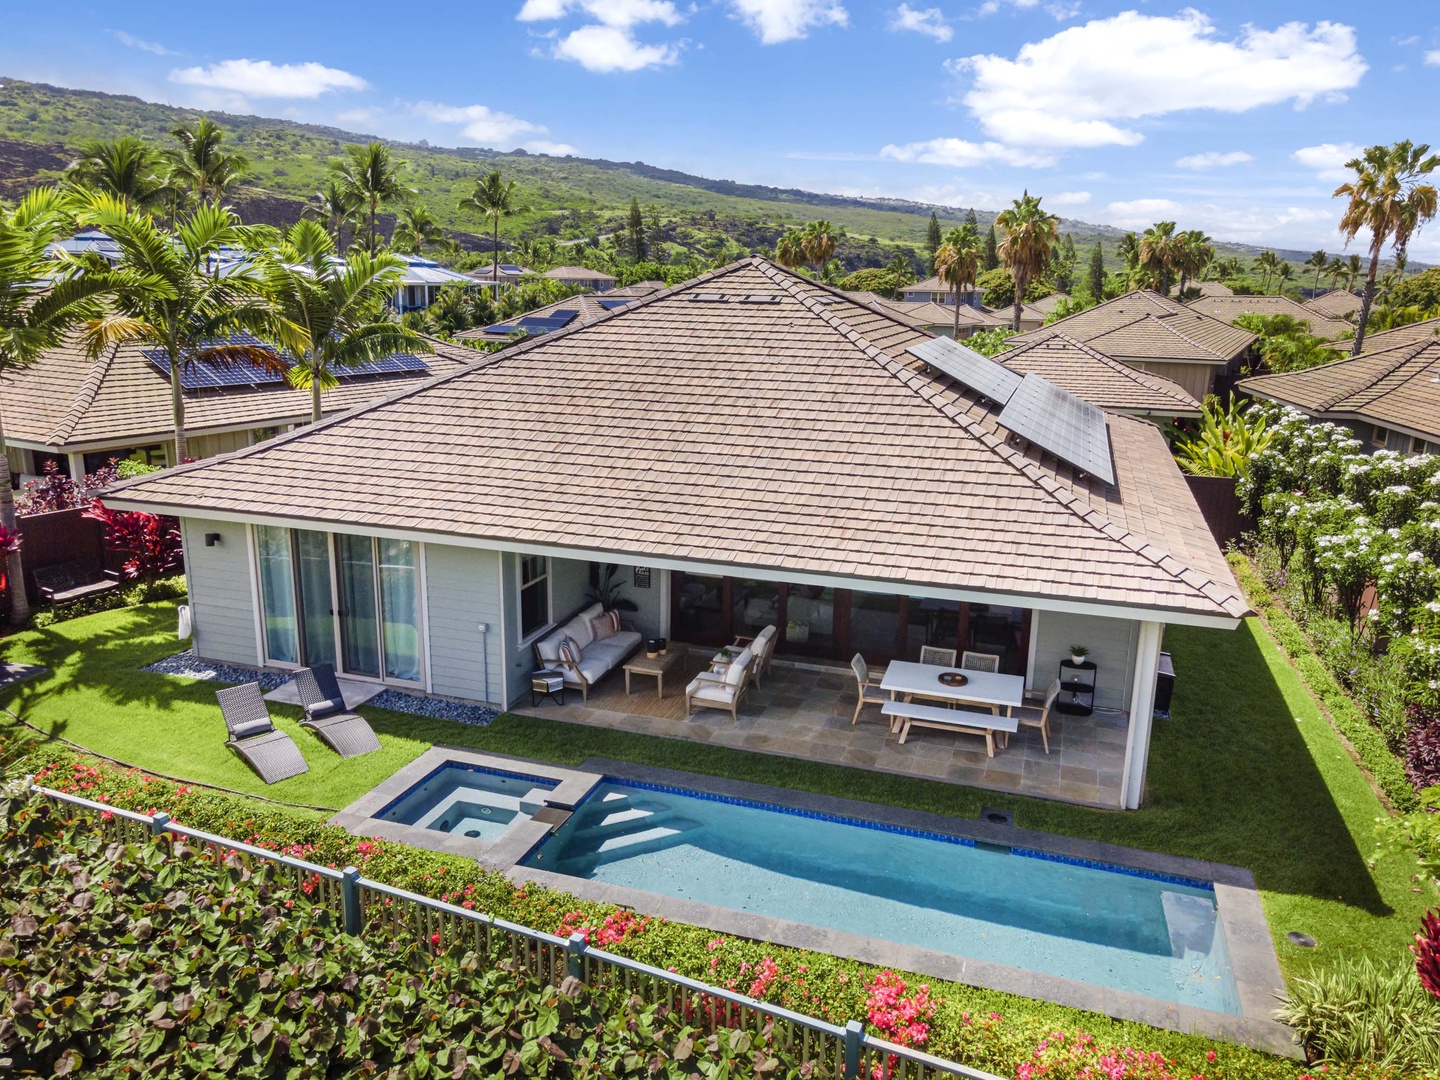 Kailua Kona Vacation Rentals, Holua Kai #27 - Aerial view of the yard and pool!